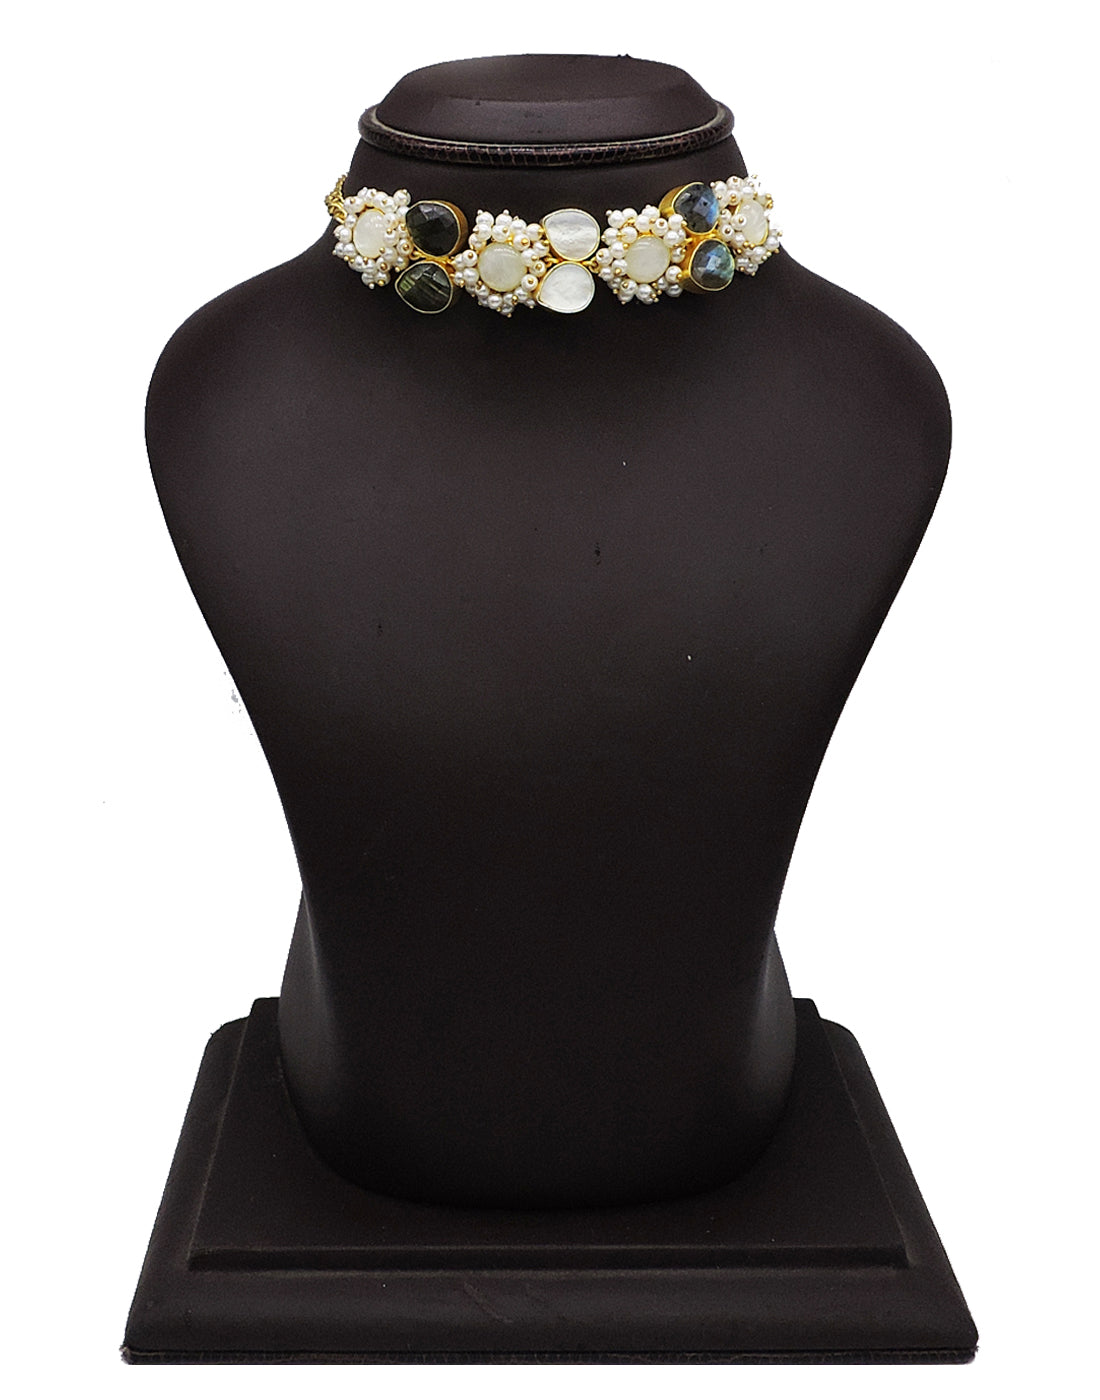 Jewelled Stone Choker - Statement Necklaces - Gold-Plated & Hypoallergenic Jewellery - Made in India - Dubai Jewellery - Dori